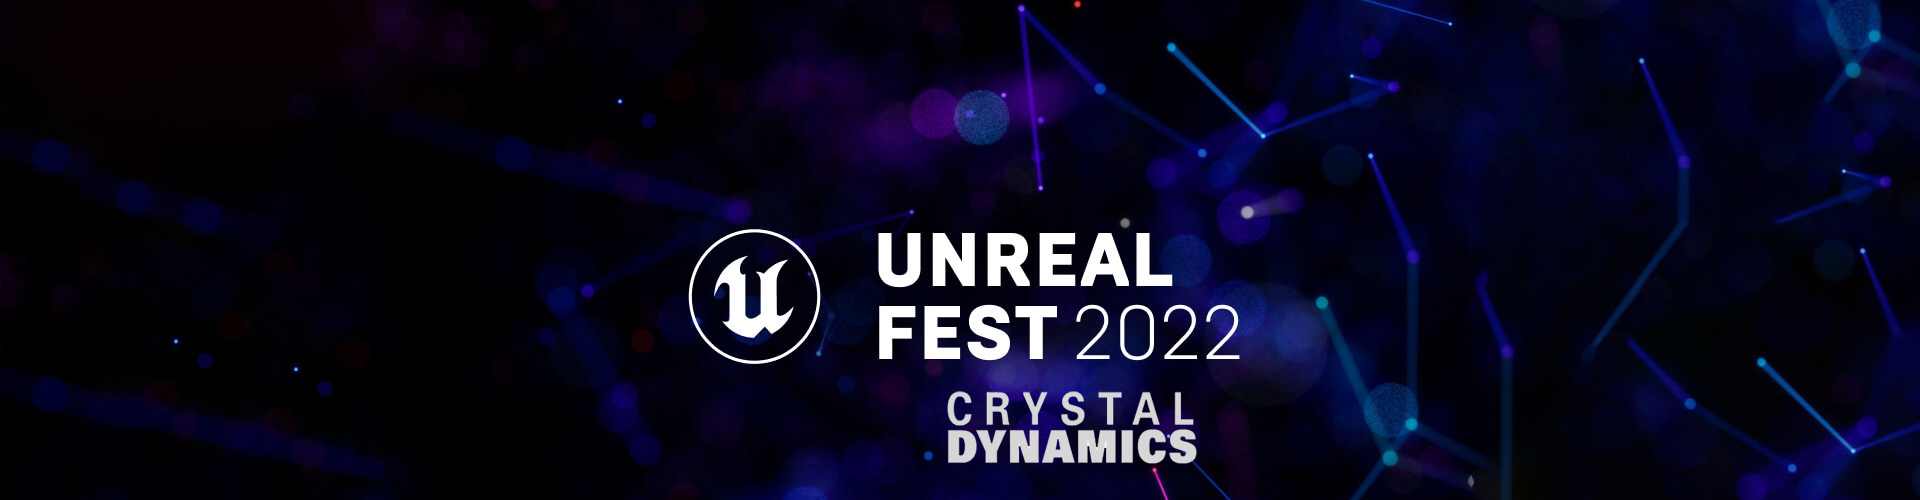 Crystal Dynamics en Unreal Fest 2022